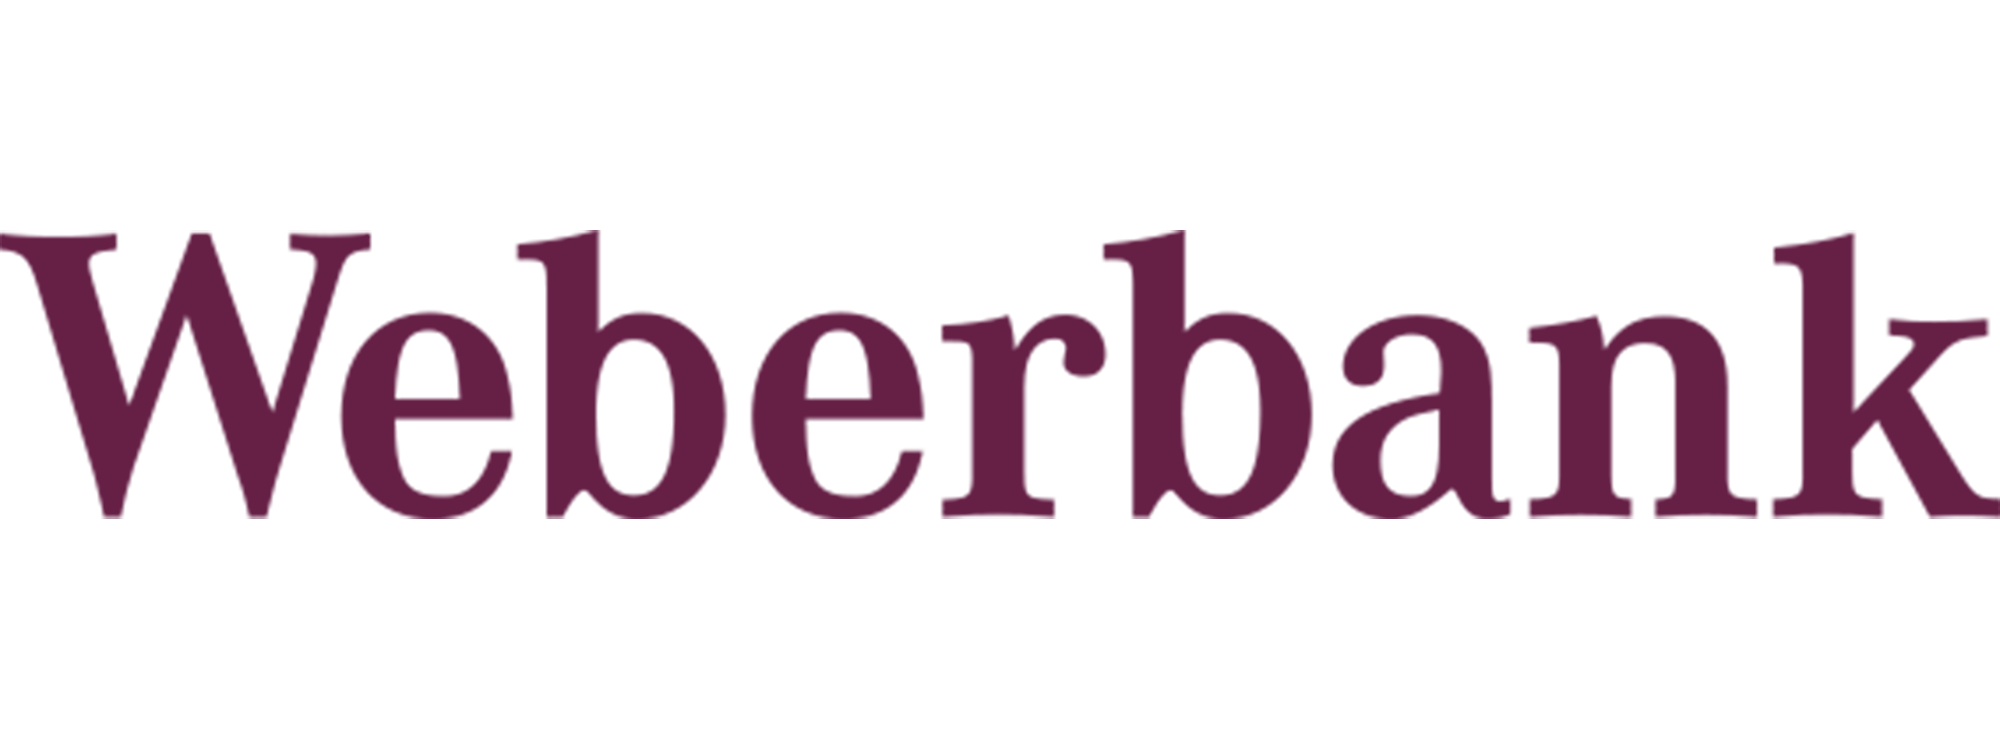 Weberbank